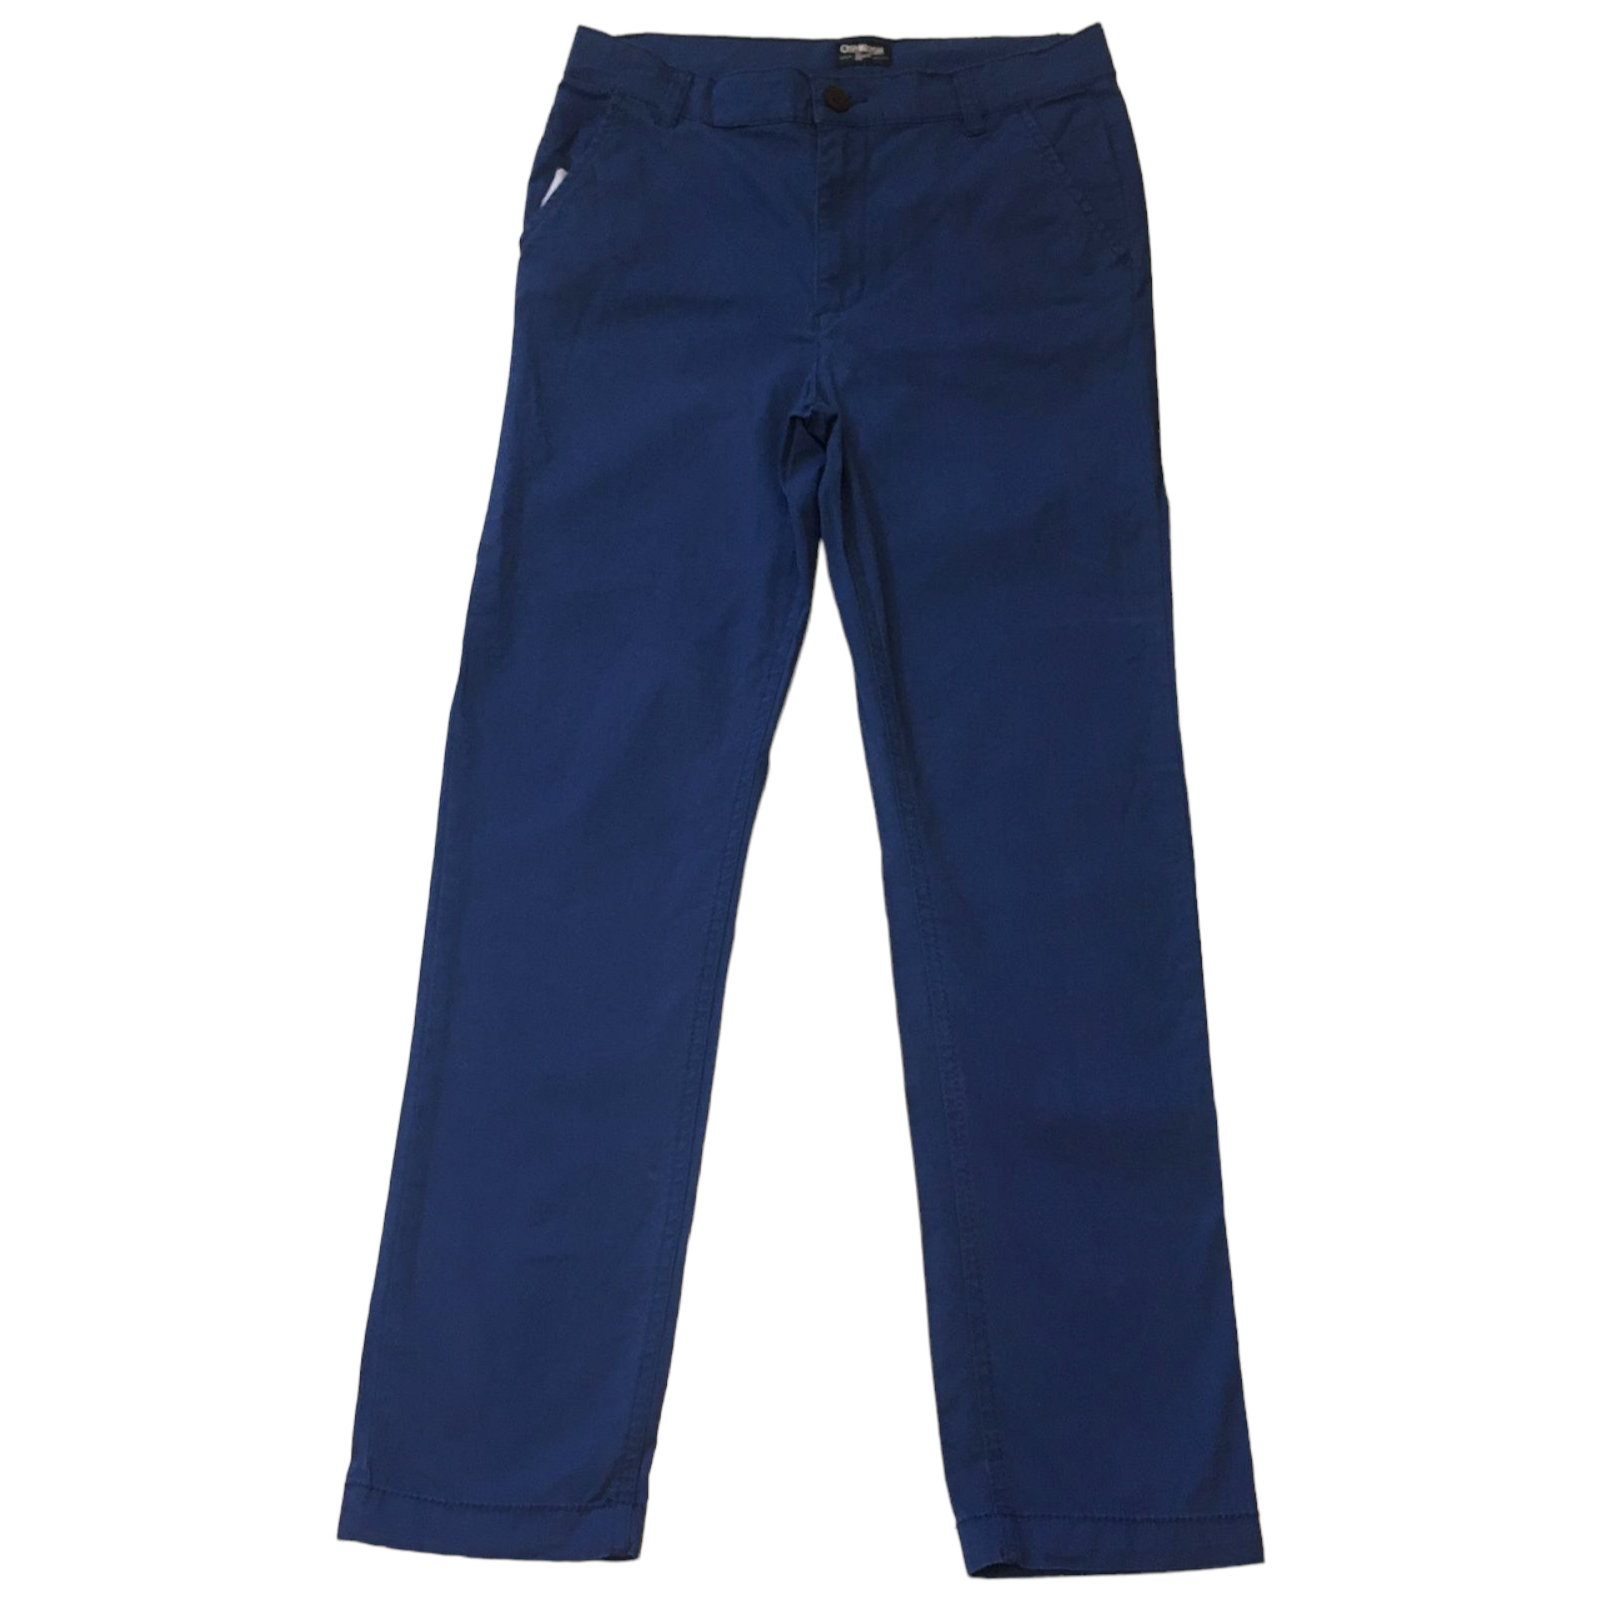 Pantalon Oshkosh azul